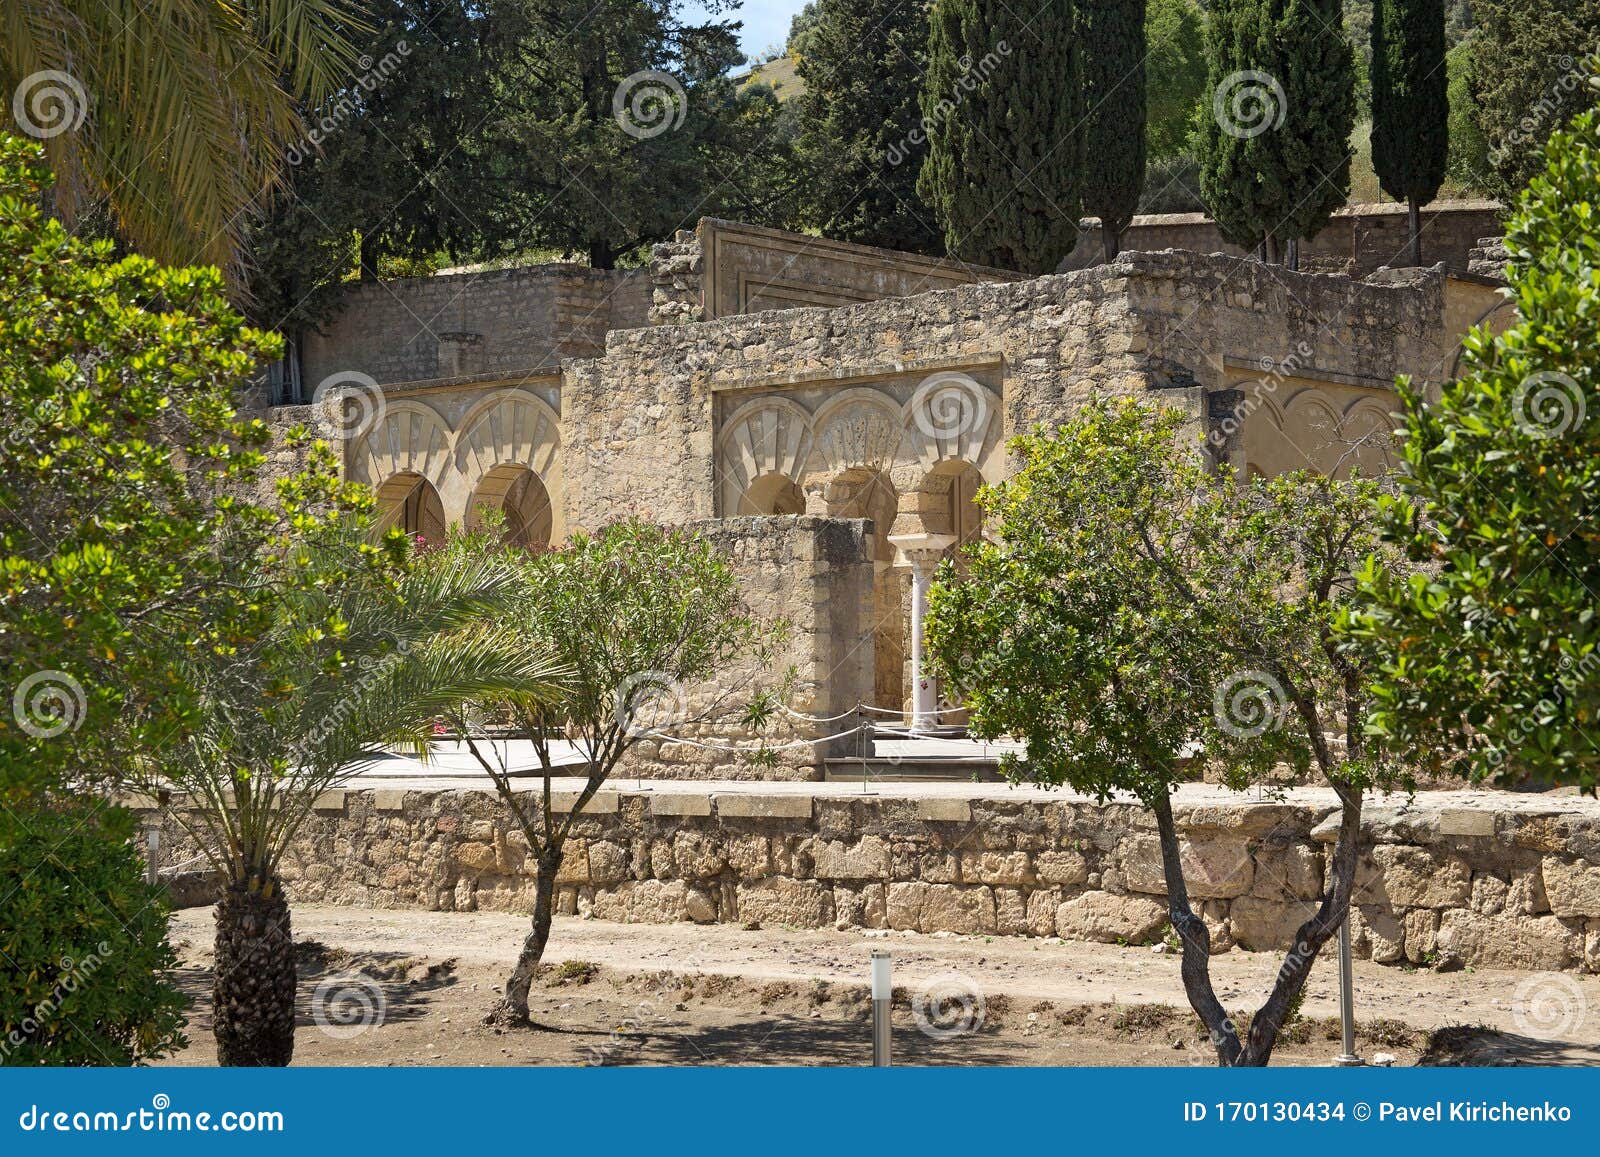 ruins of medina azahara - vast, fortified andalus palace-city